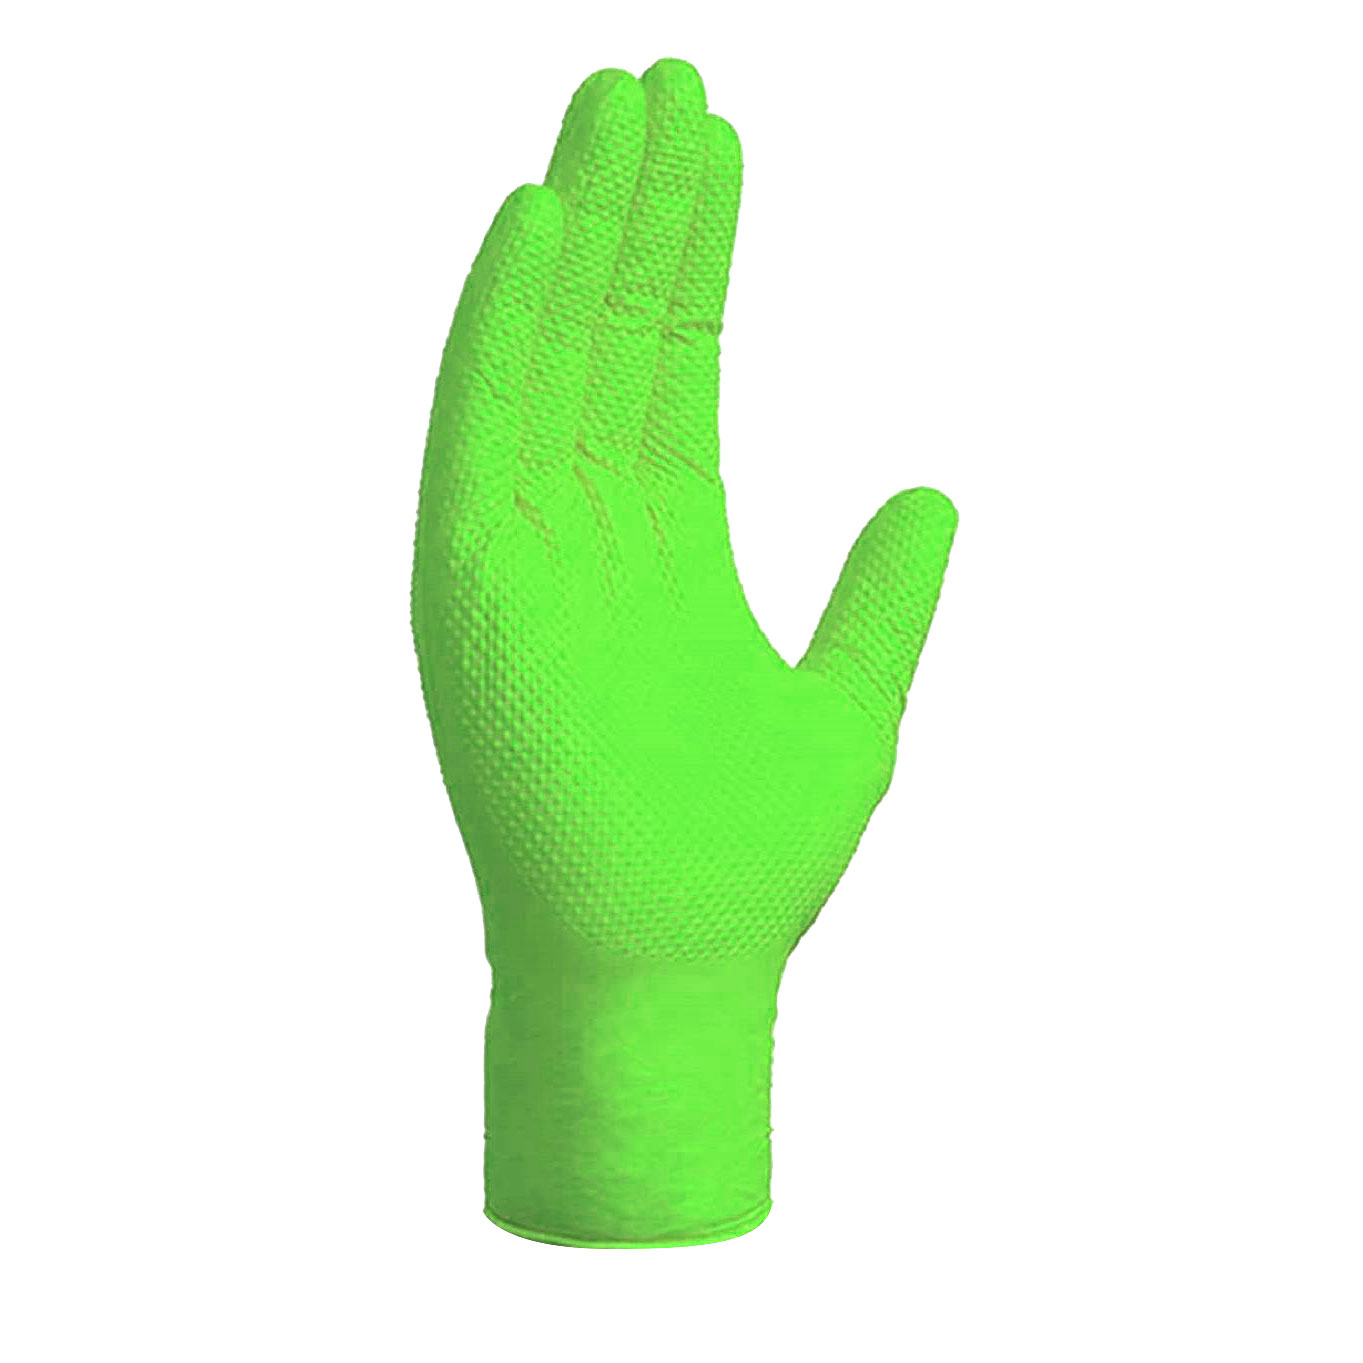 Gloveworks Heavy Duty Nitrile Work Gloves, Green, XLarge, 100/Box